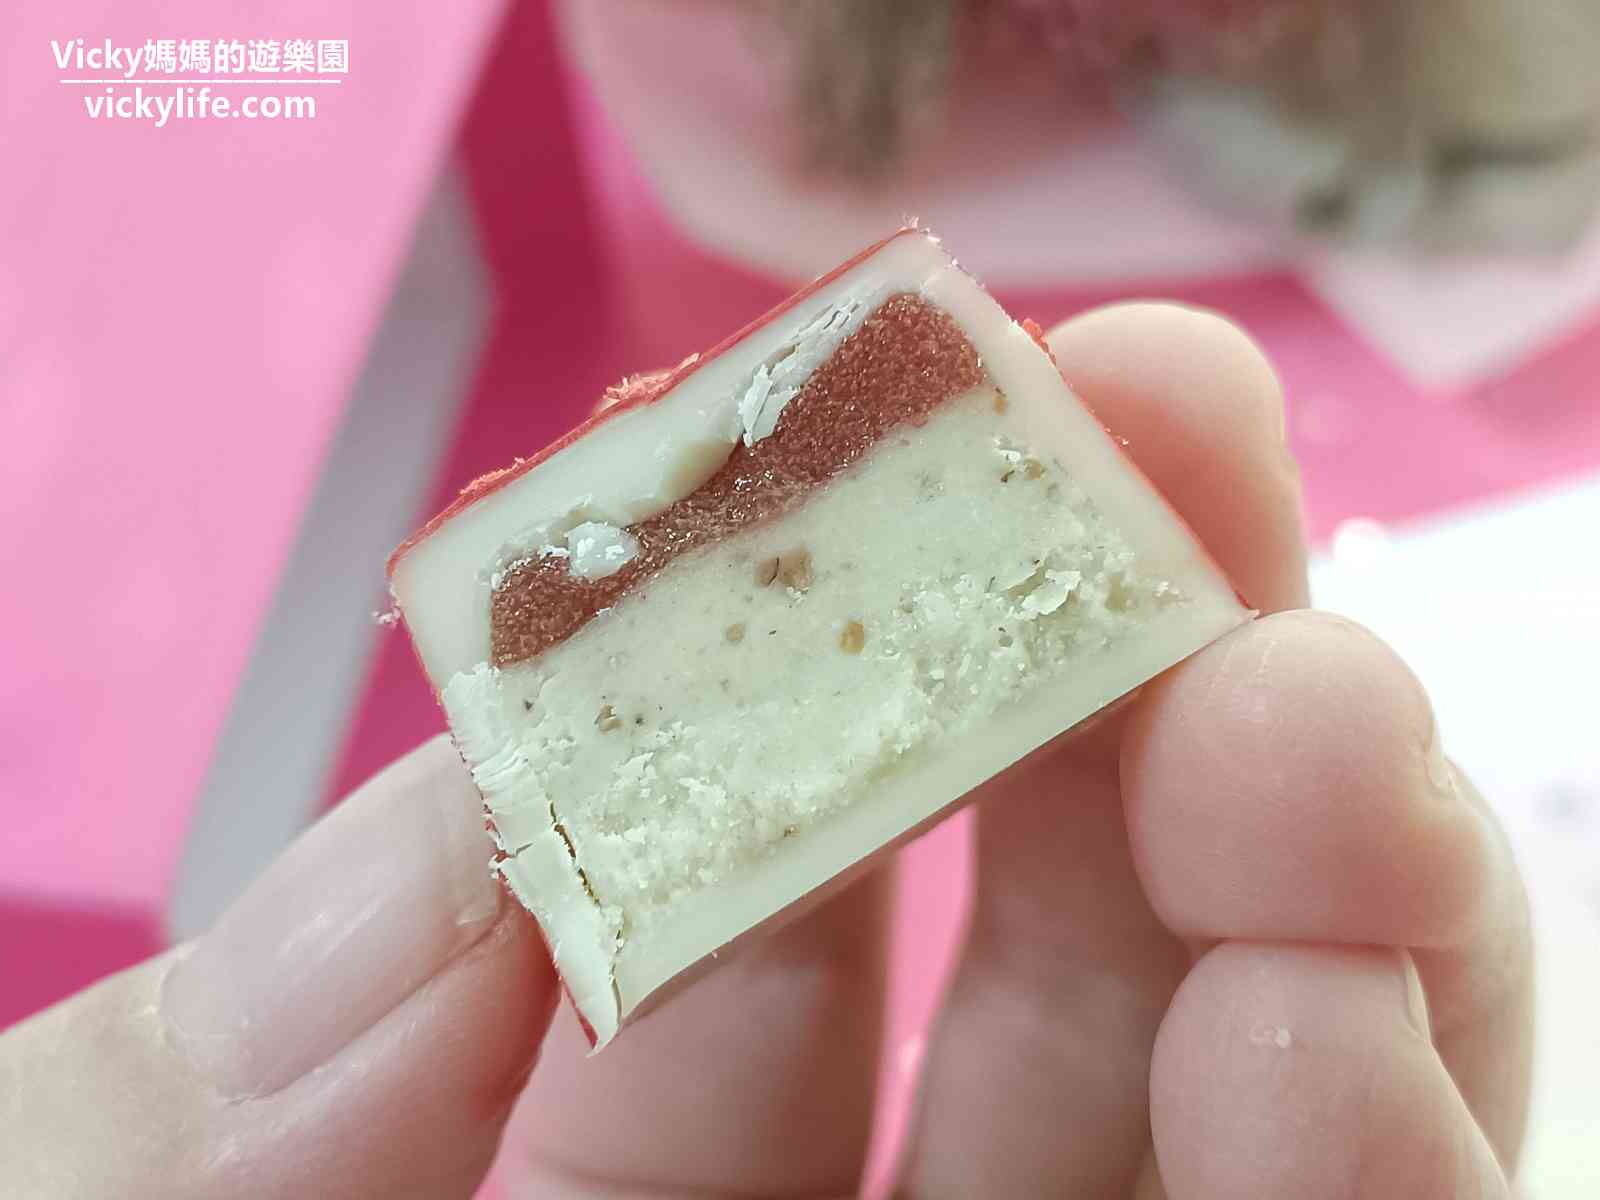 Cona’s妮娜巧克力：加入台灣食材的精緻巧克力超令人驚艷，從外觀到一口咬下，滿足感爆棚